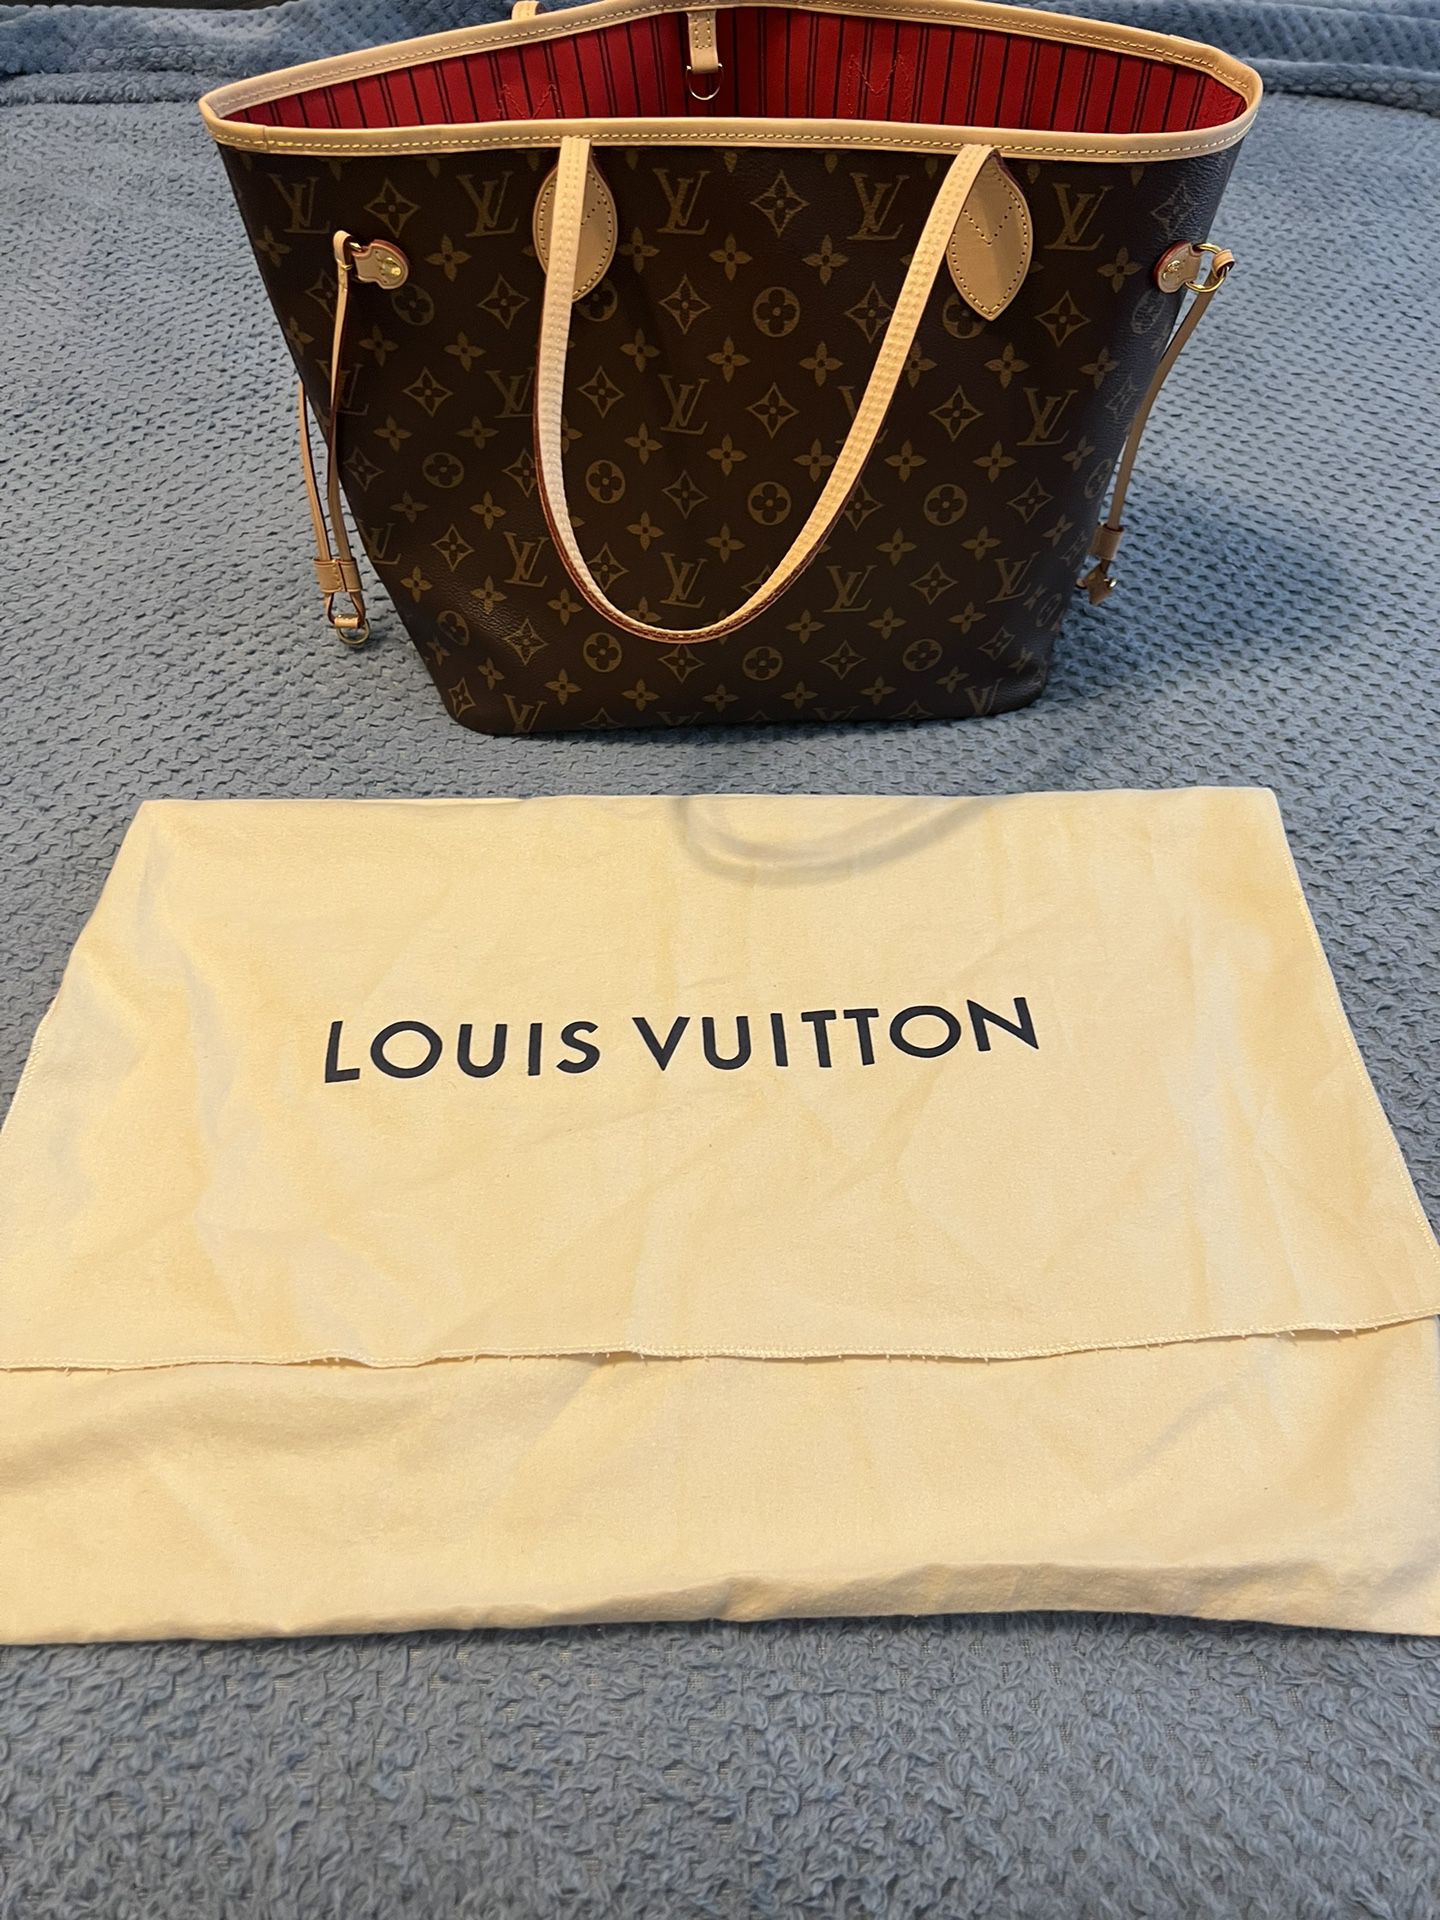 Louis Vuitton Articles DE Voyage Maison Fondee EN 1854 for Sale in Austell,  GA - OfferUp